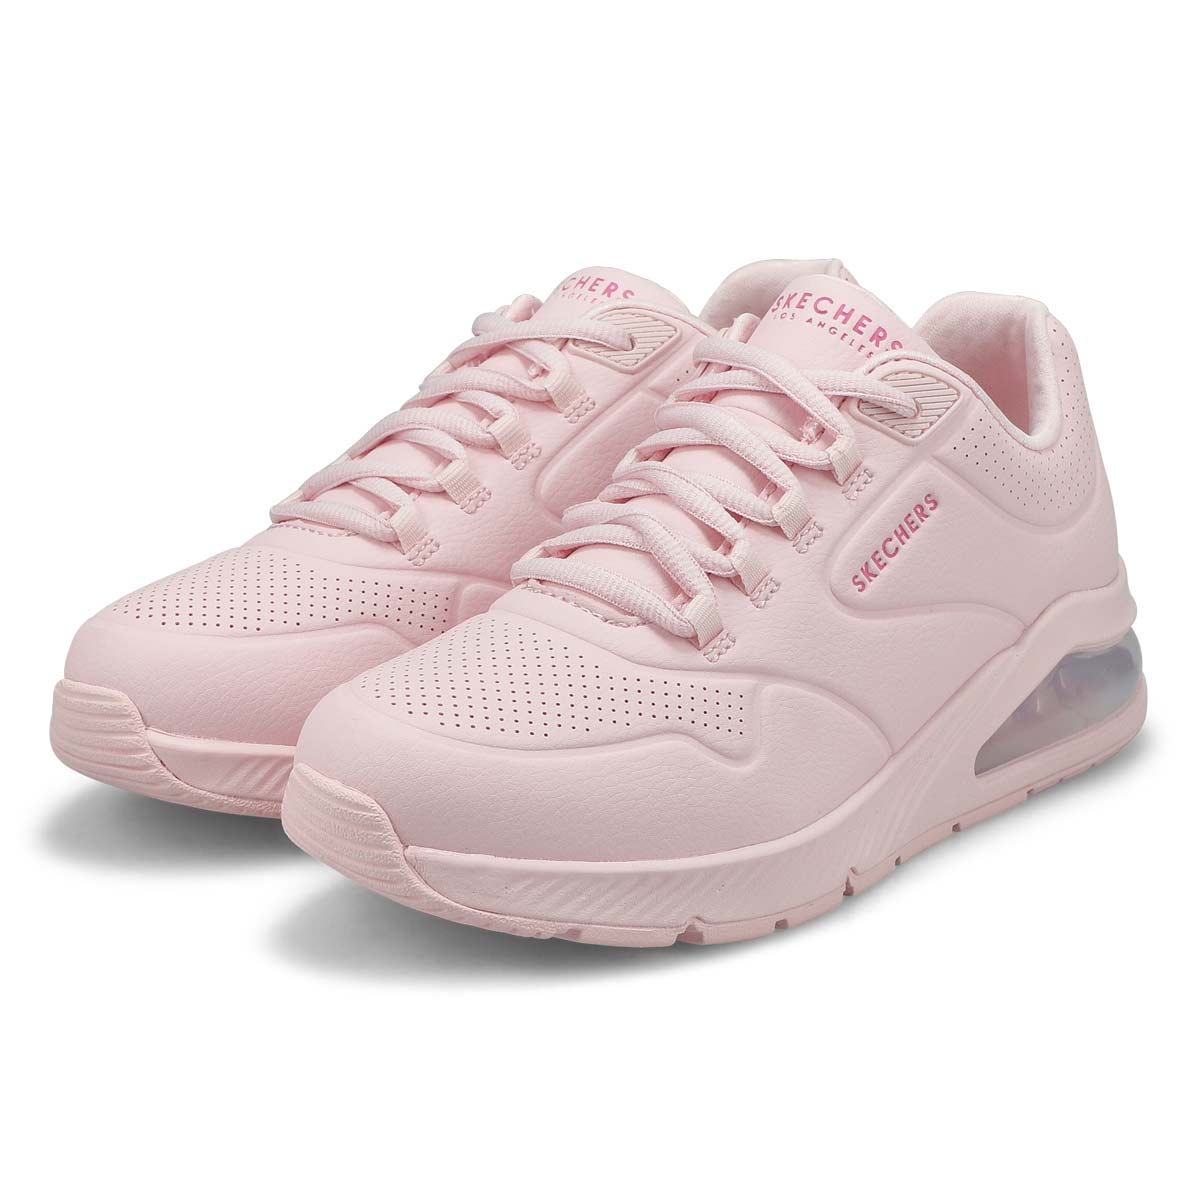 Women's Uno 2 Fashion Sneaker - Light Pink